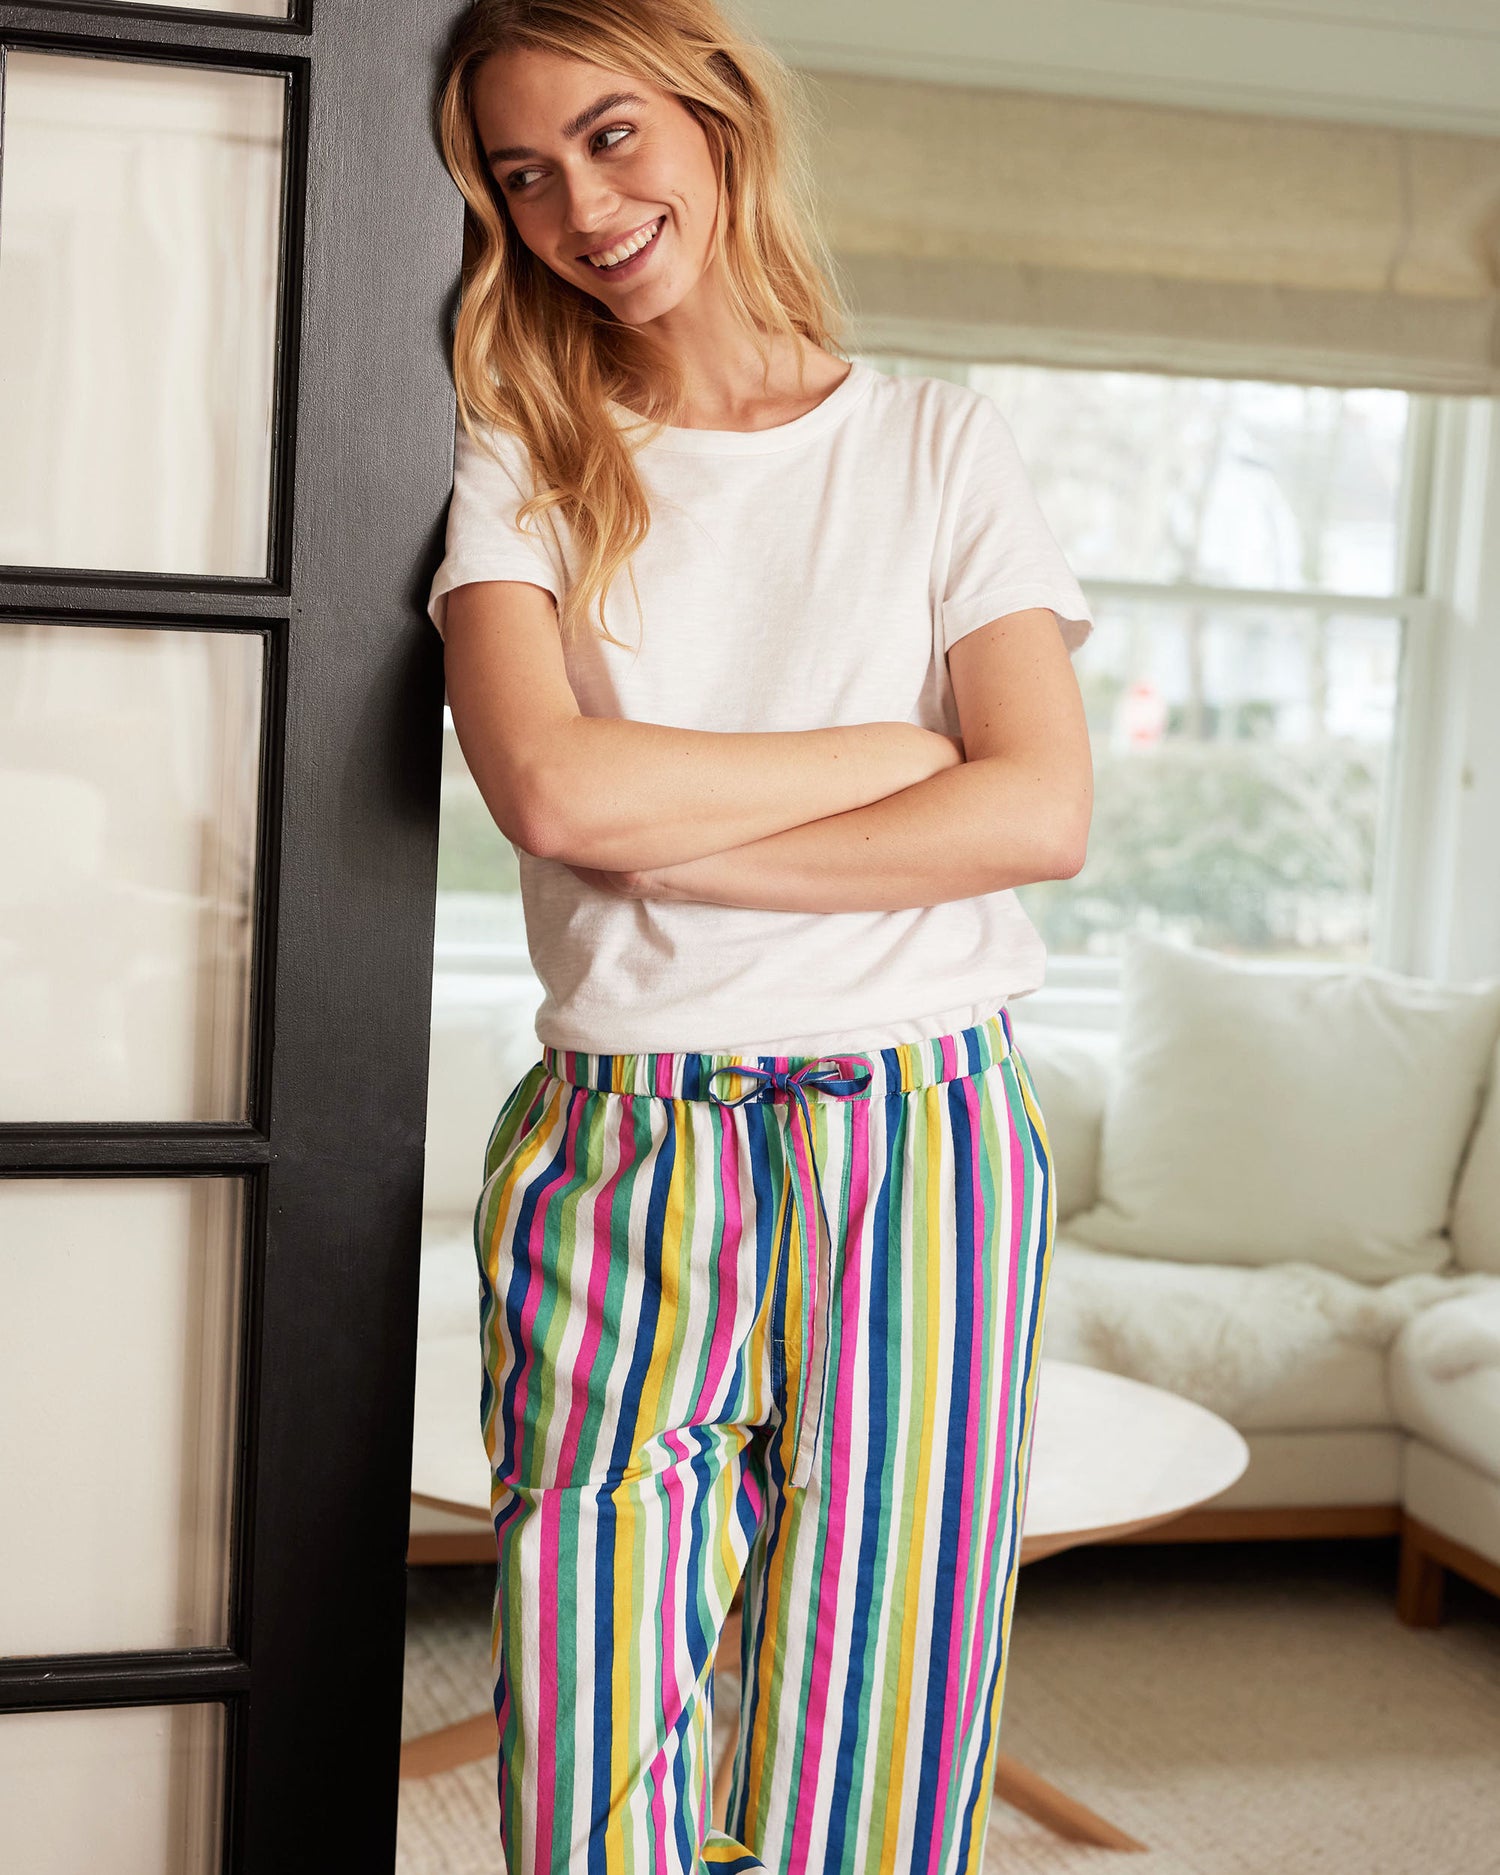 Sincerely Stripes - Pajama Pants - Indigo - Printfresh